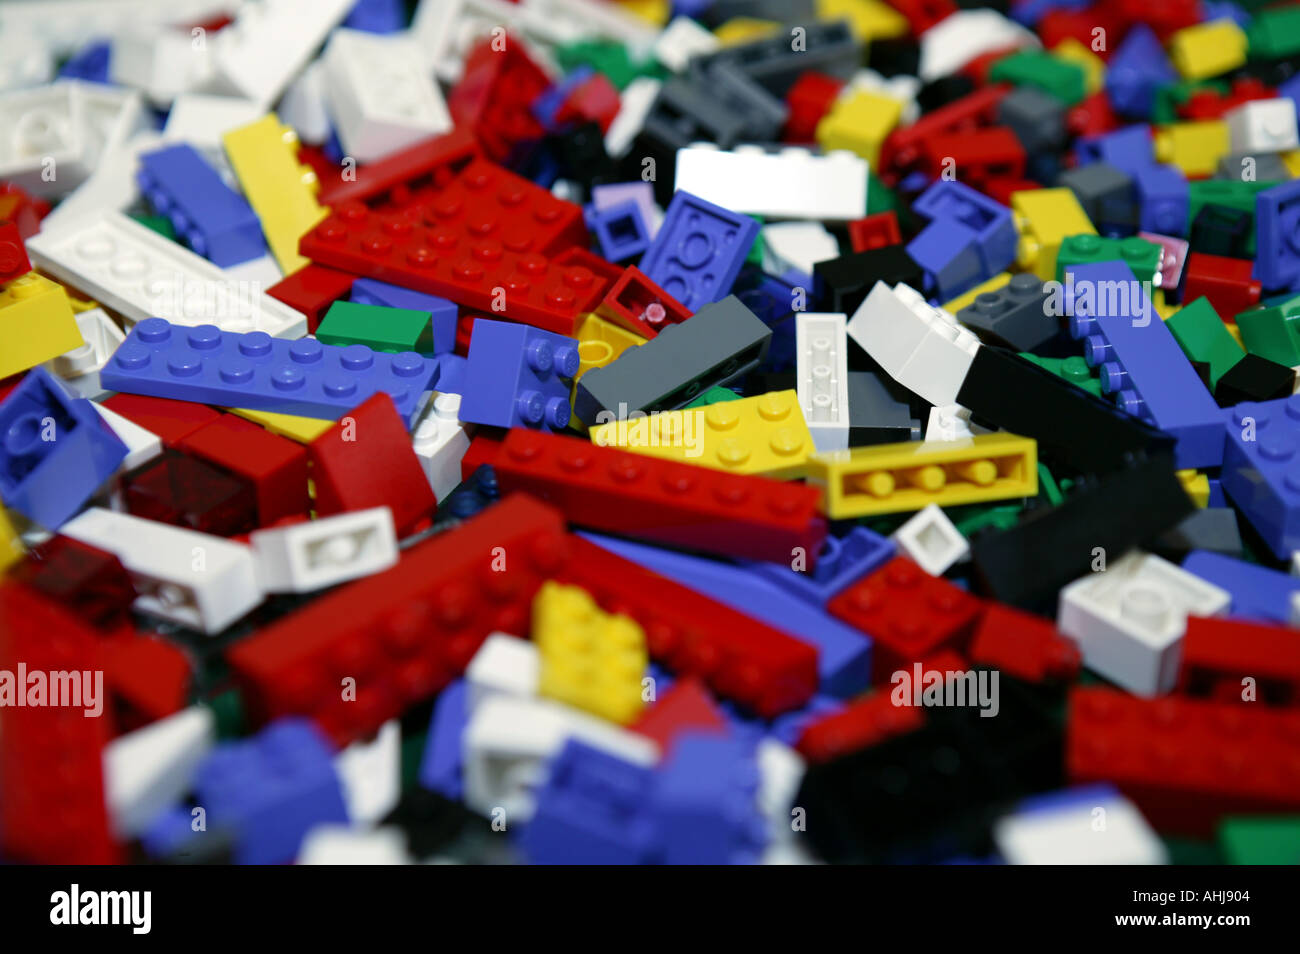 lego building blocks for kids